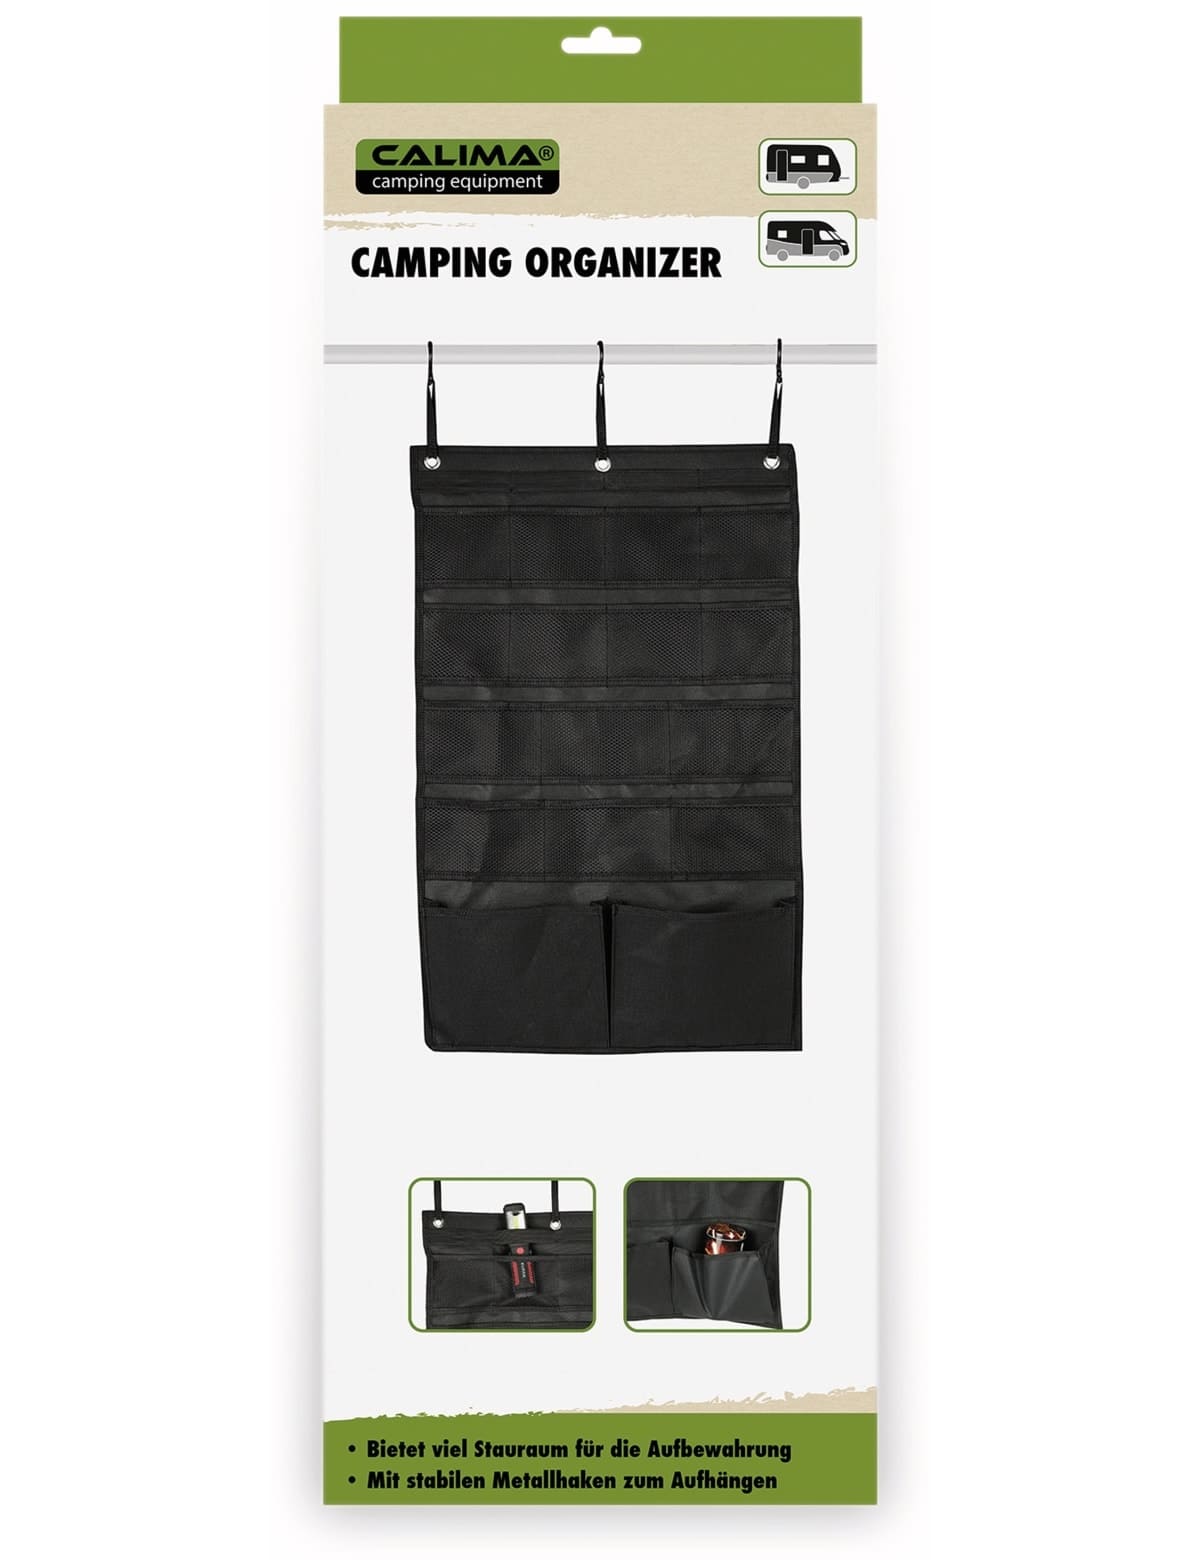 CALIMA CAMPING EQUIPMENT Camping Organizer